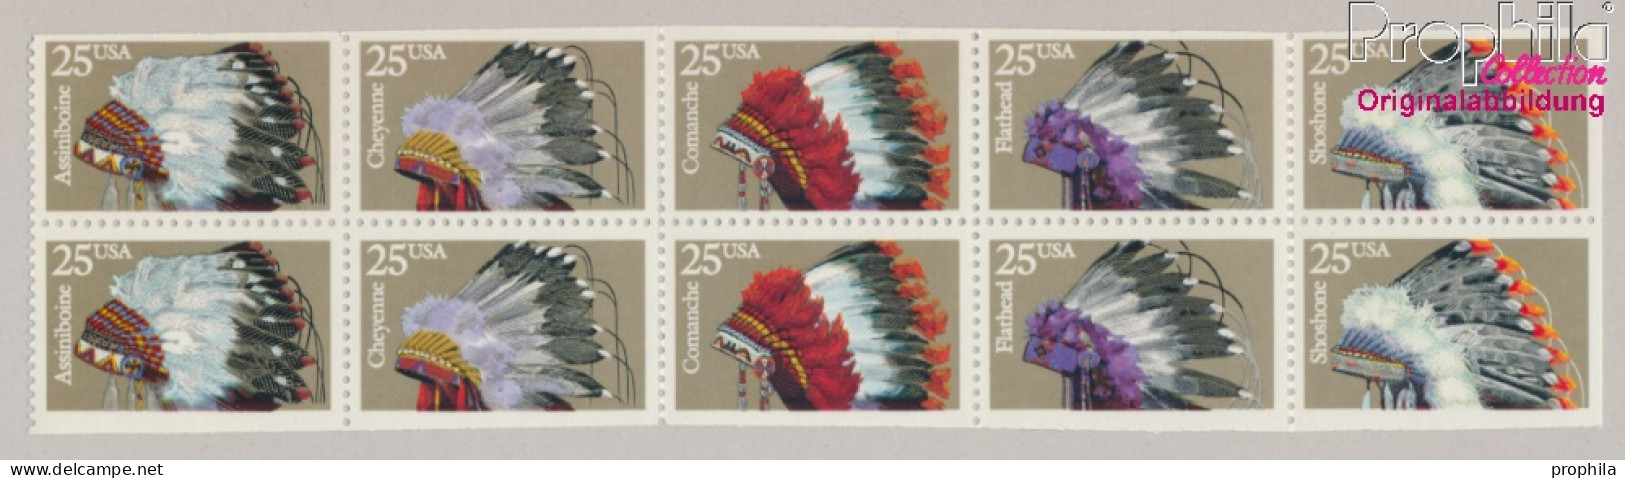 USA 2098-2102 Zehnerblock (kompl.Ausg.) Postfrisch 1990 Indianer Kopfschmuck (10368265 - Neufs